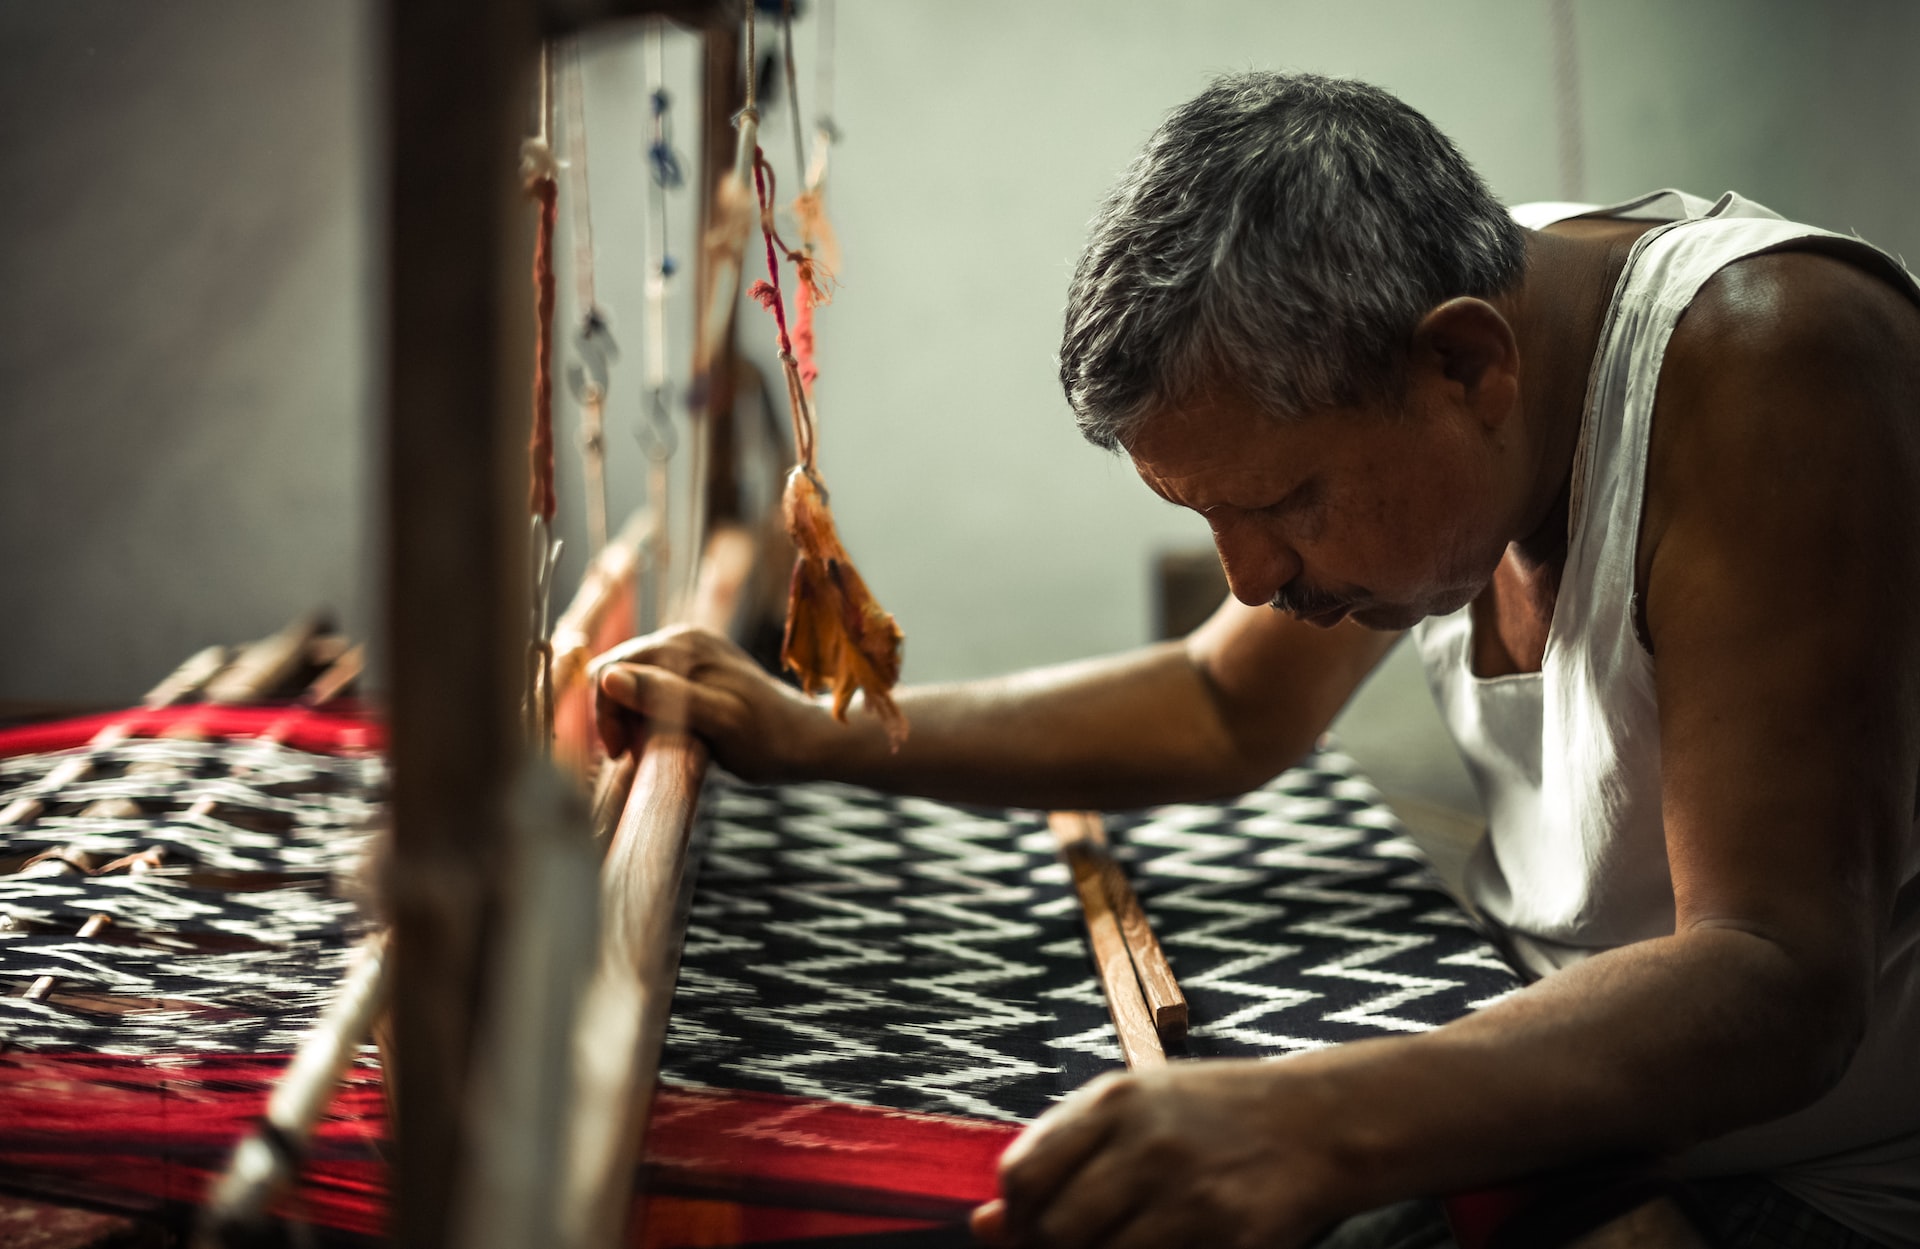 handloom weaving at Jyoti Handloom